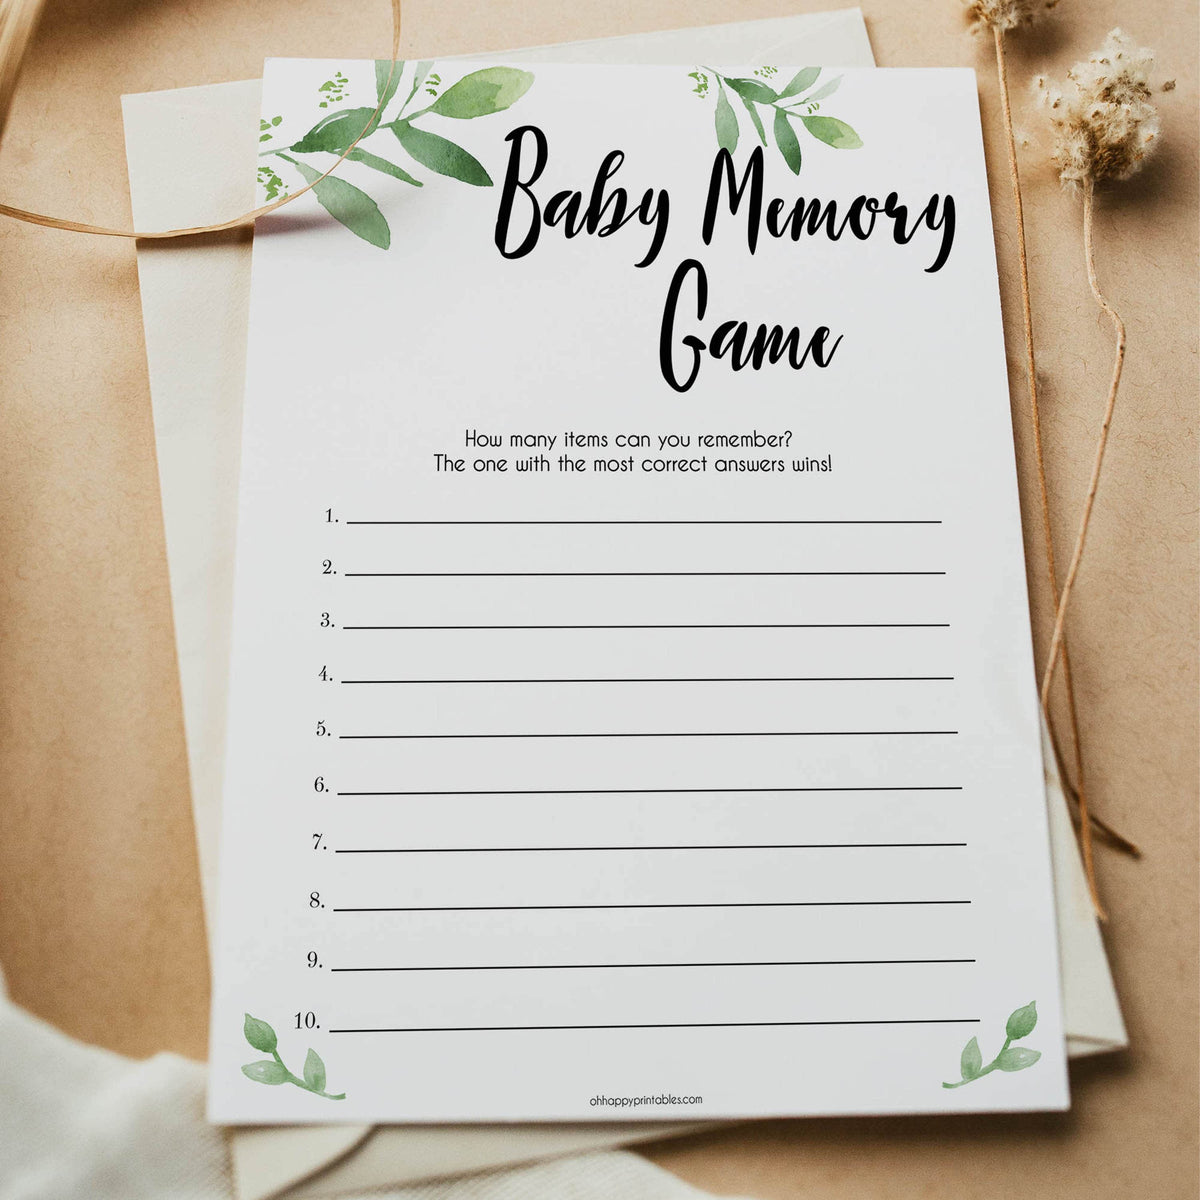 botanical baby memory game, printable baby shower games, fun baby games, baby shower games, floral printable baby games, popular baby games